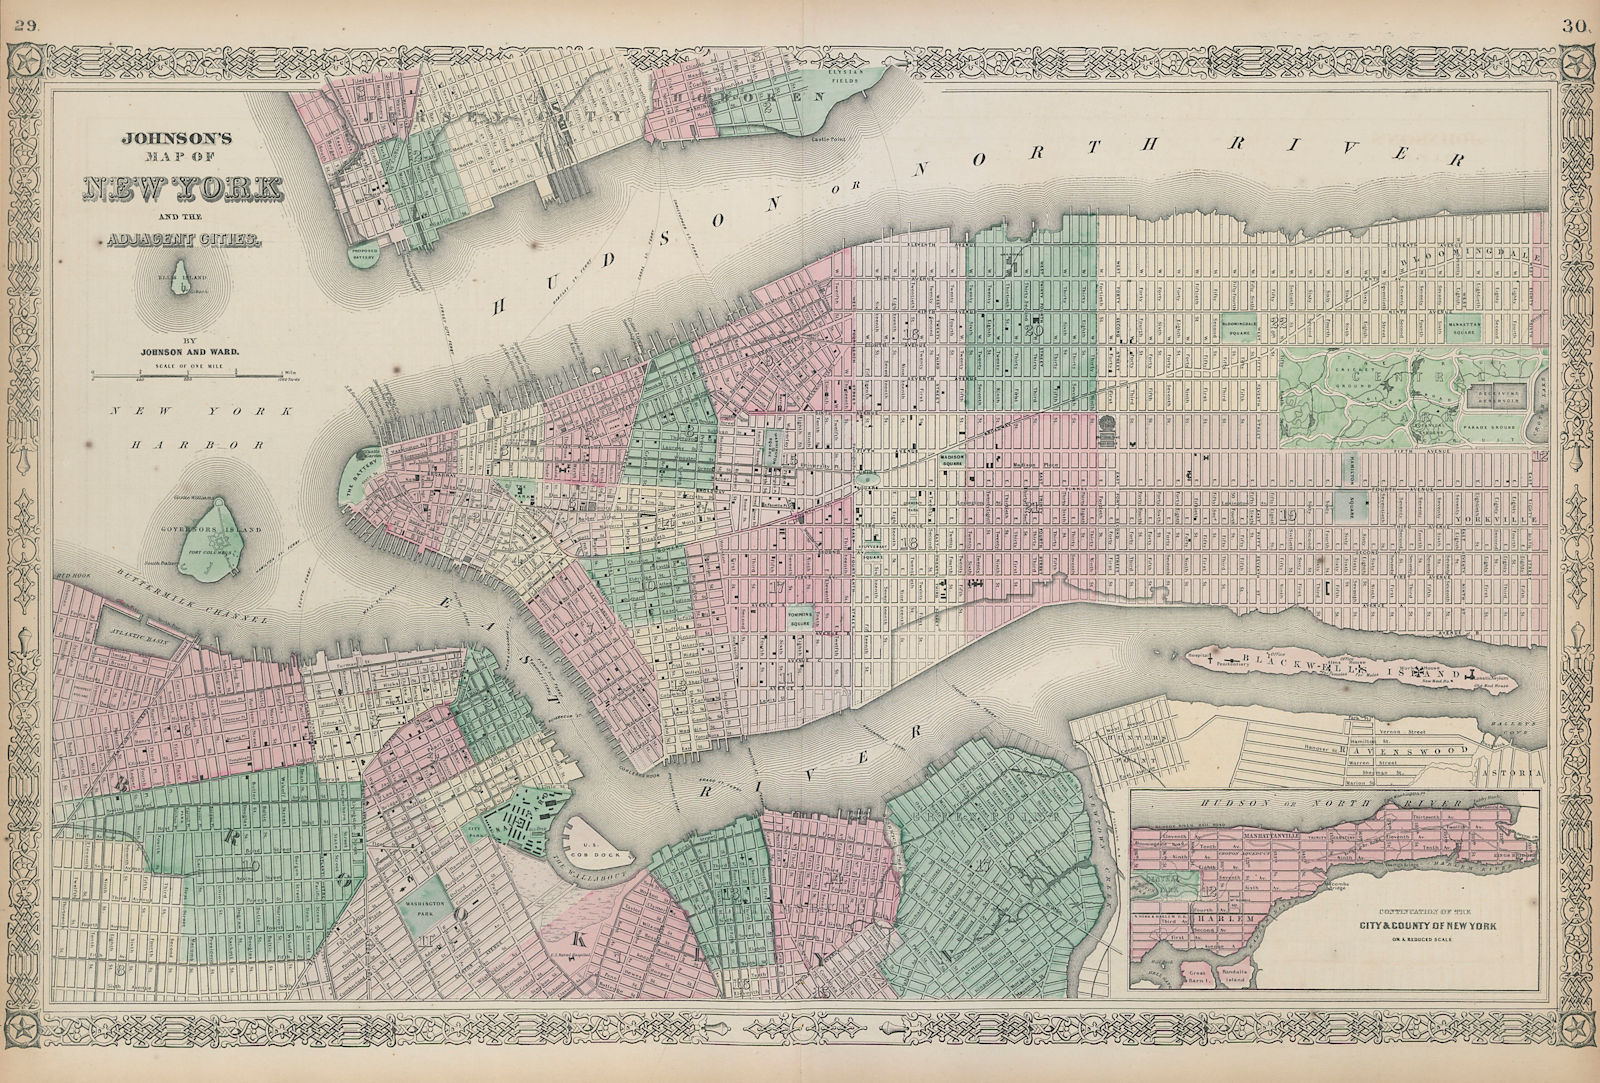 Johnson's New York & Adjacent Cities. Brooklyn Manhattan Jersey City 1865 map